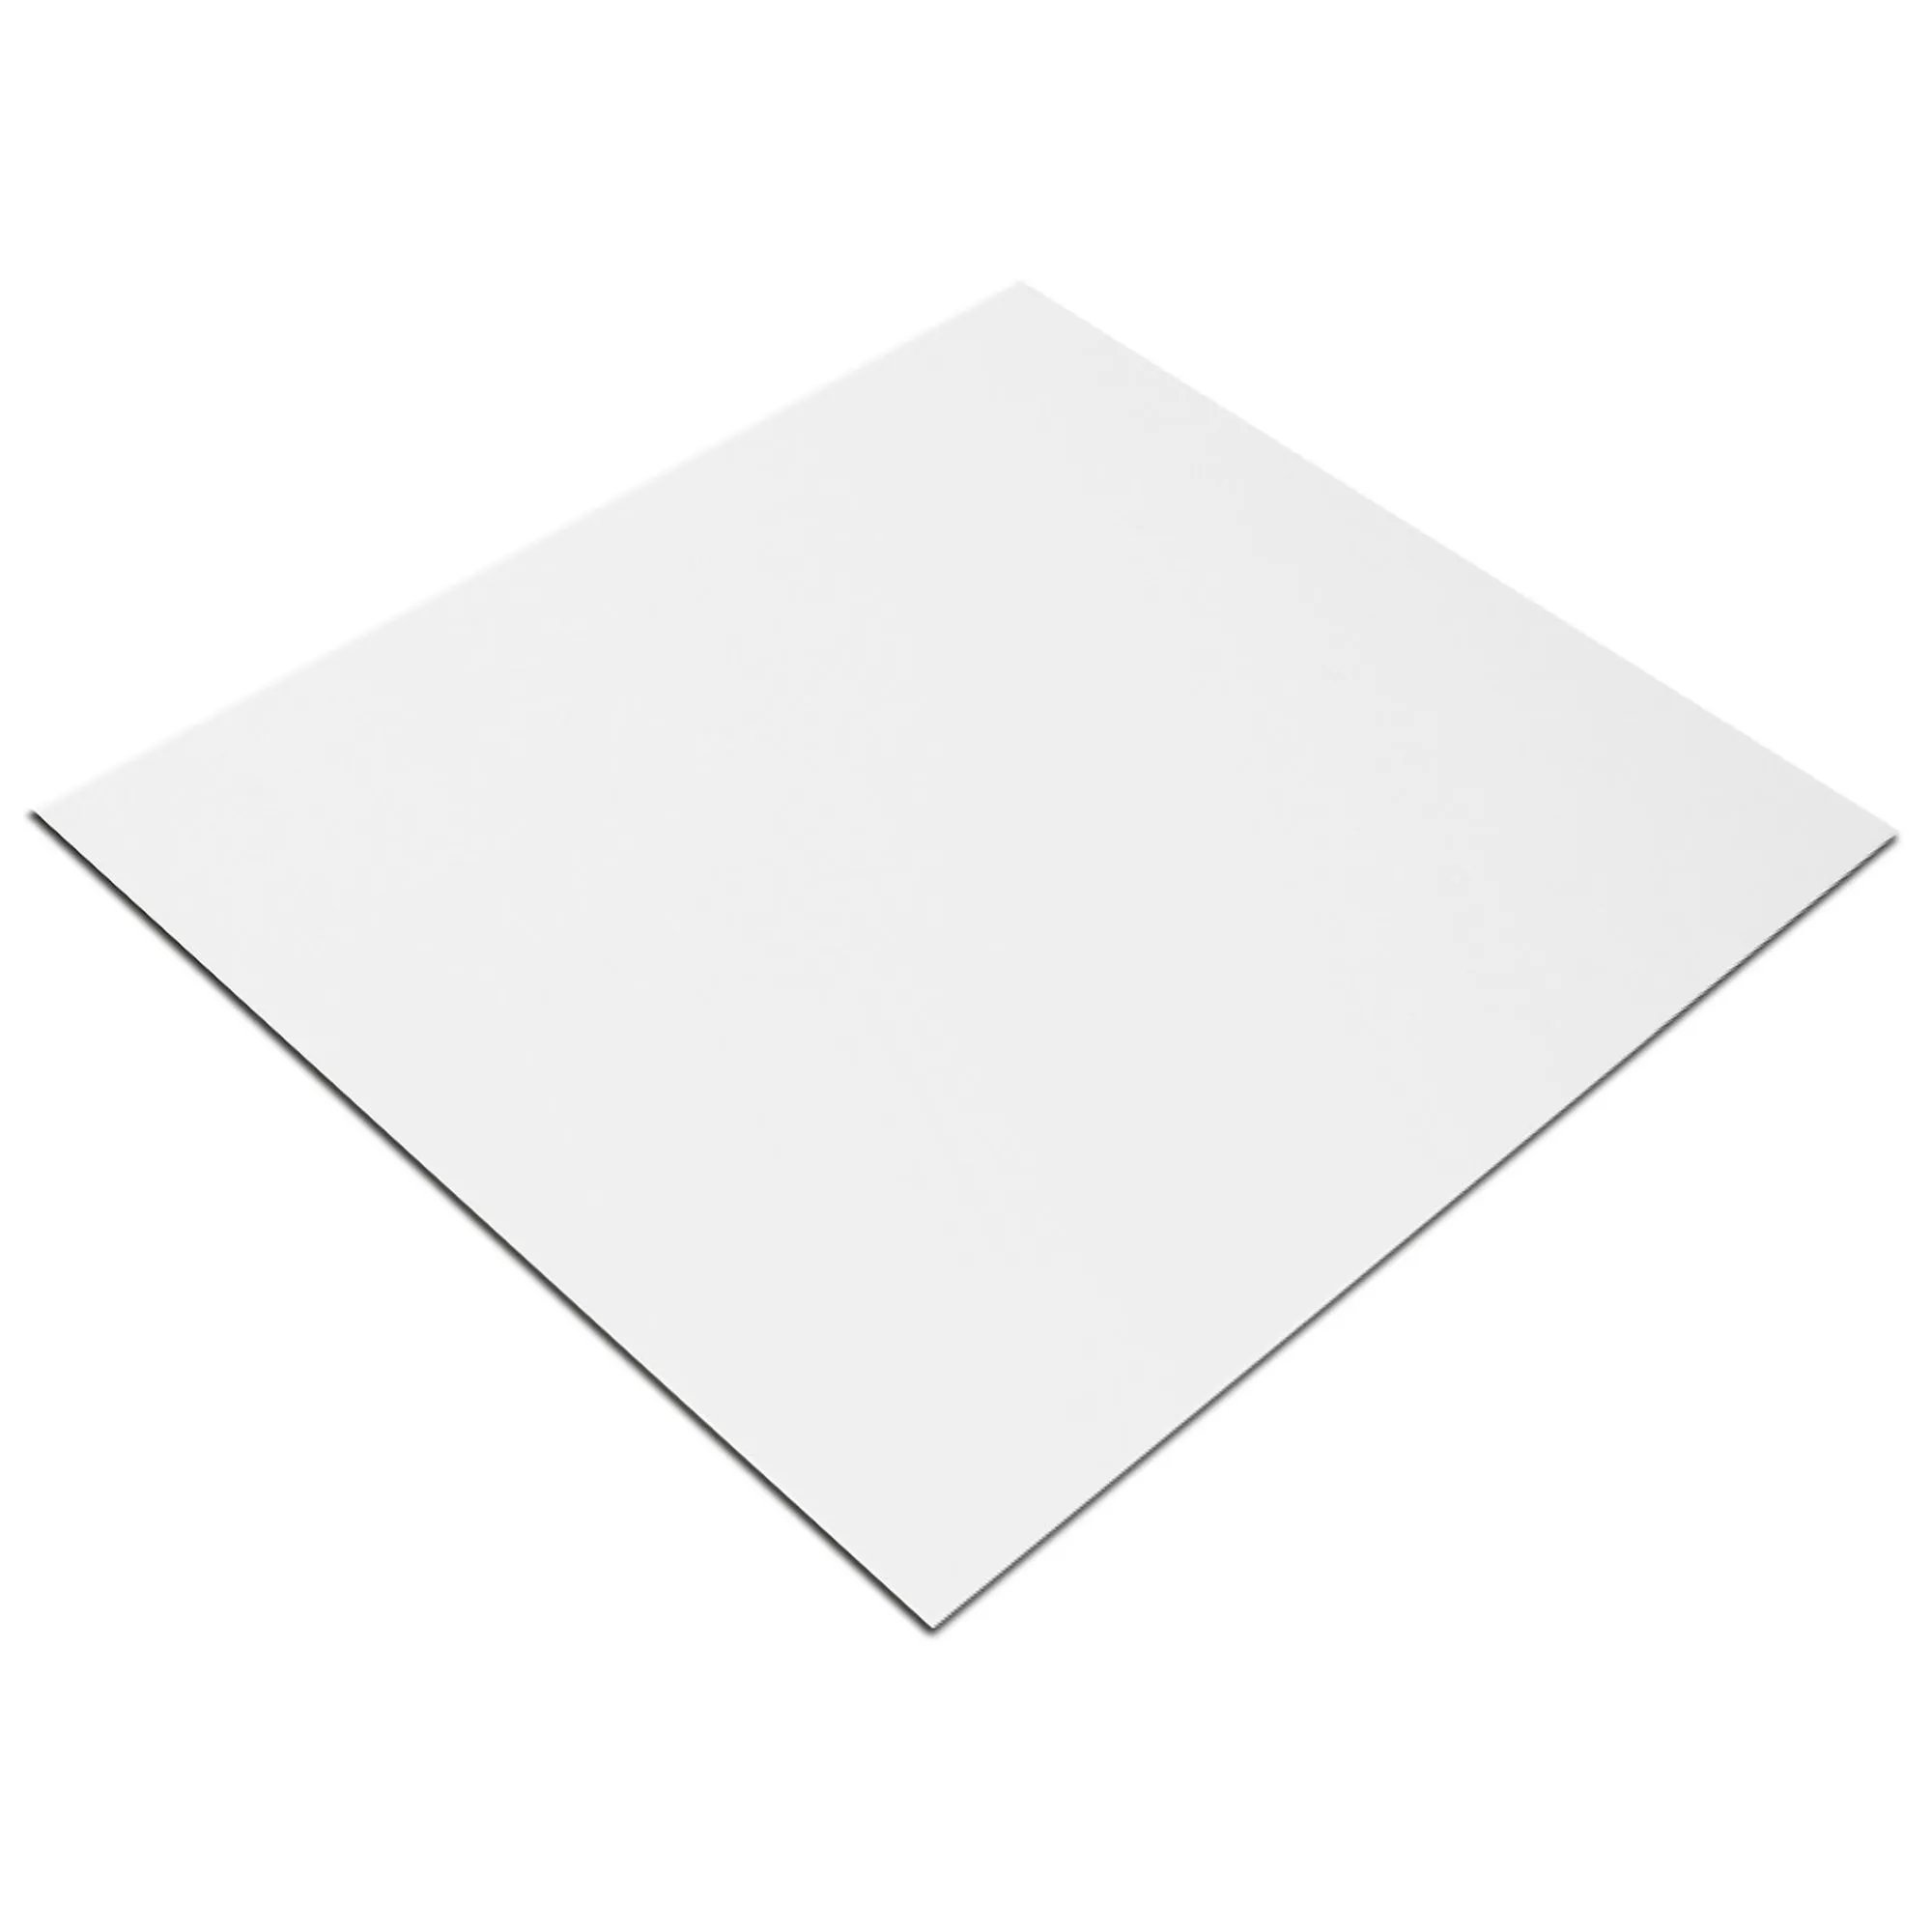 Sample Wall Tiles Fenway White Mat 15x15cm